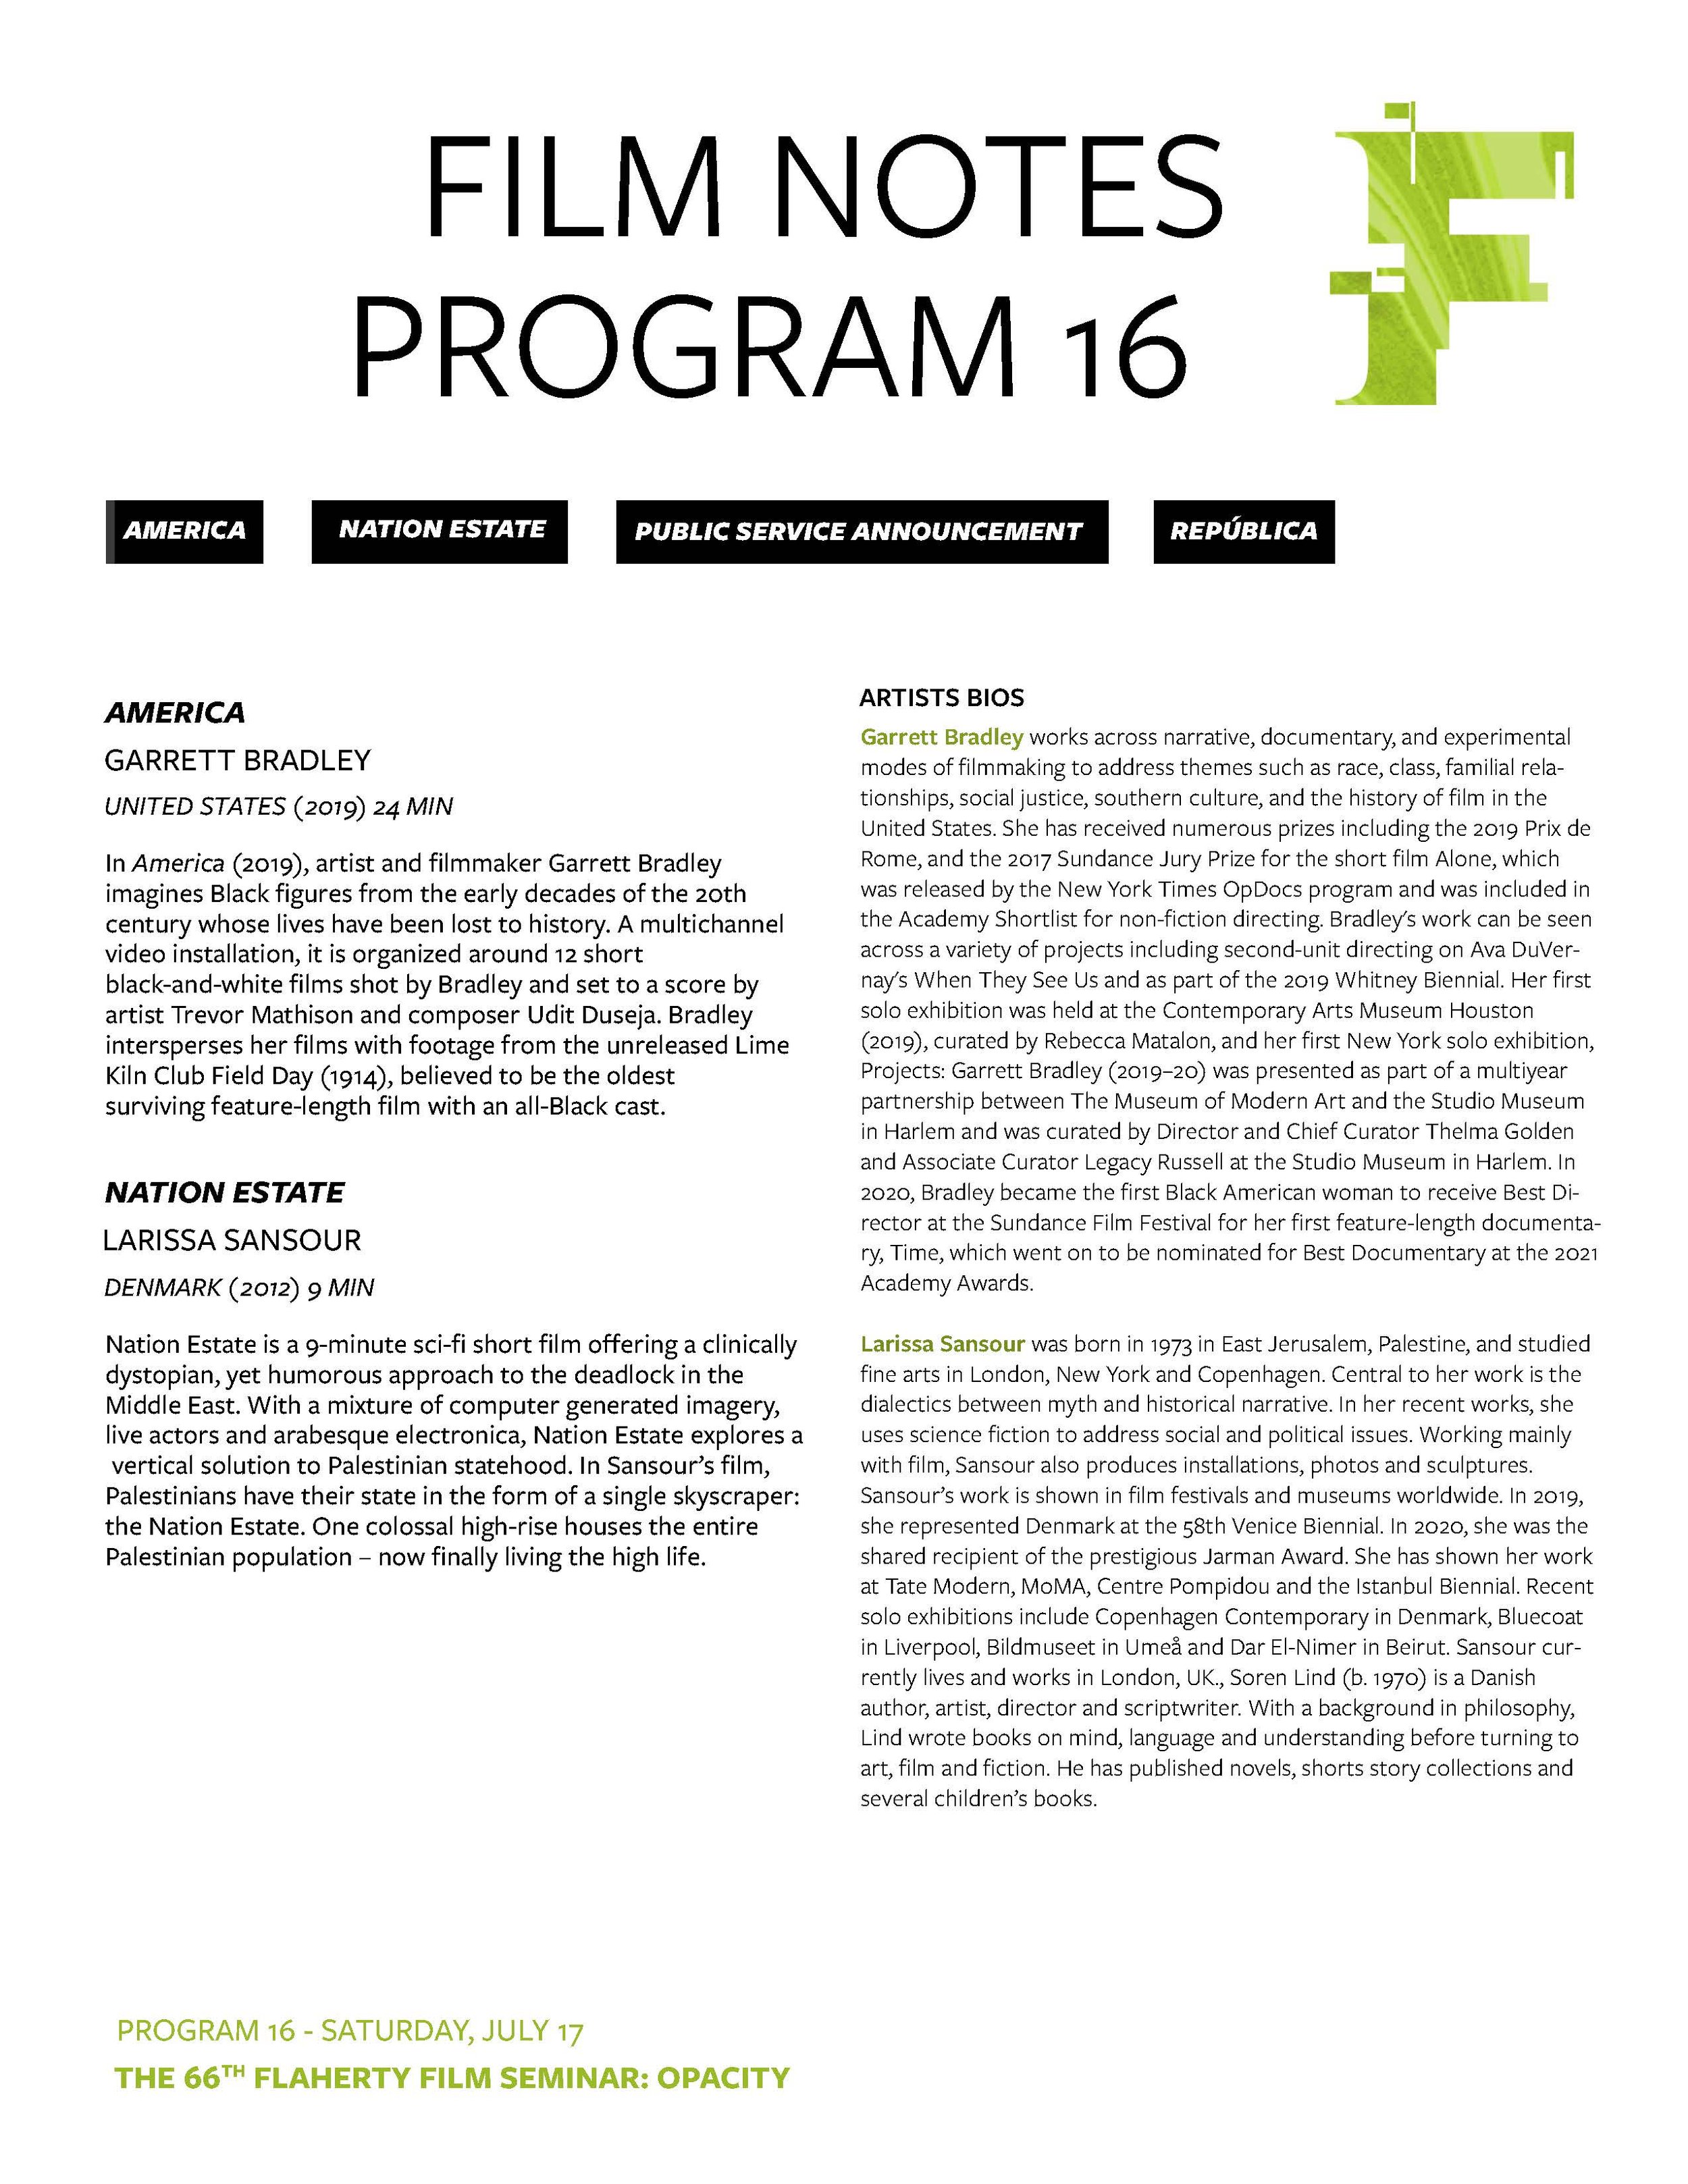 Program 16 Film Notes_Page_1.jpg